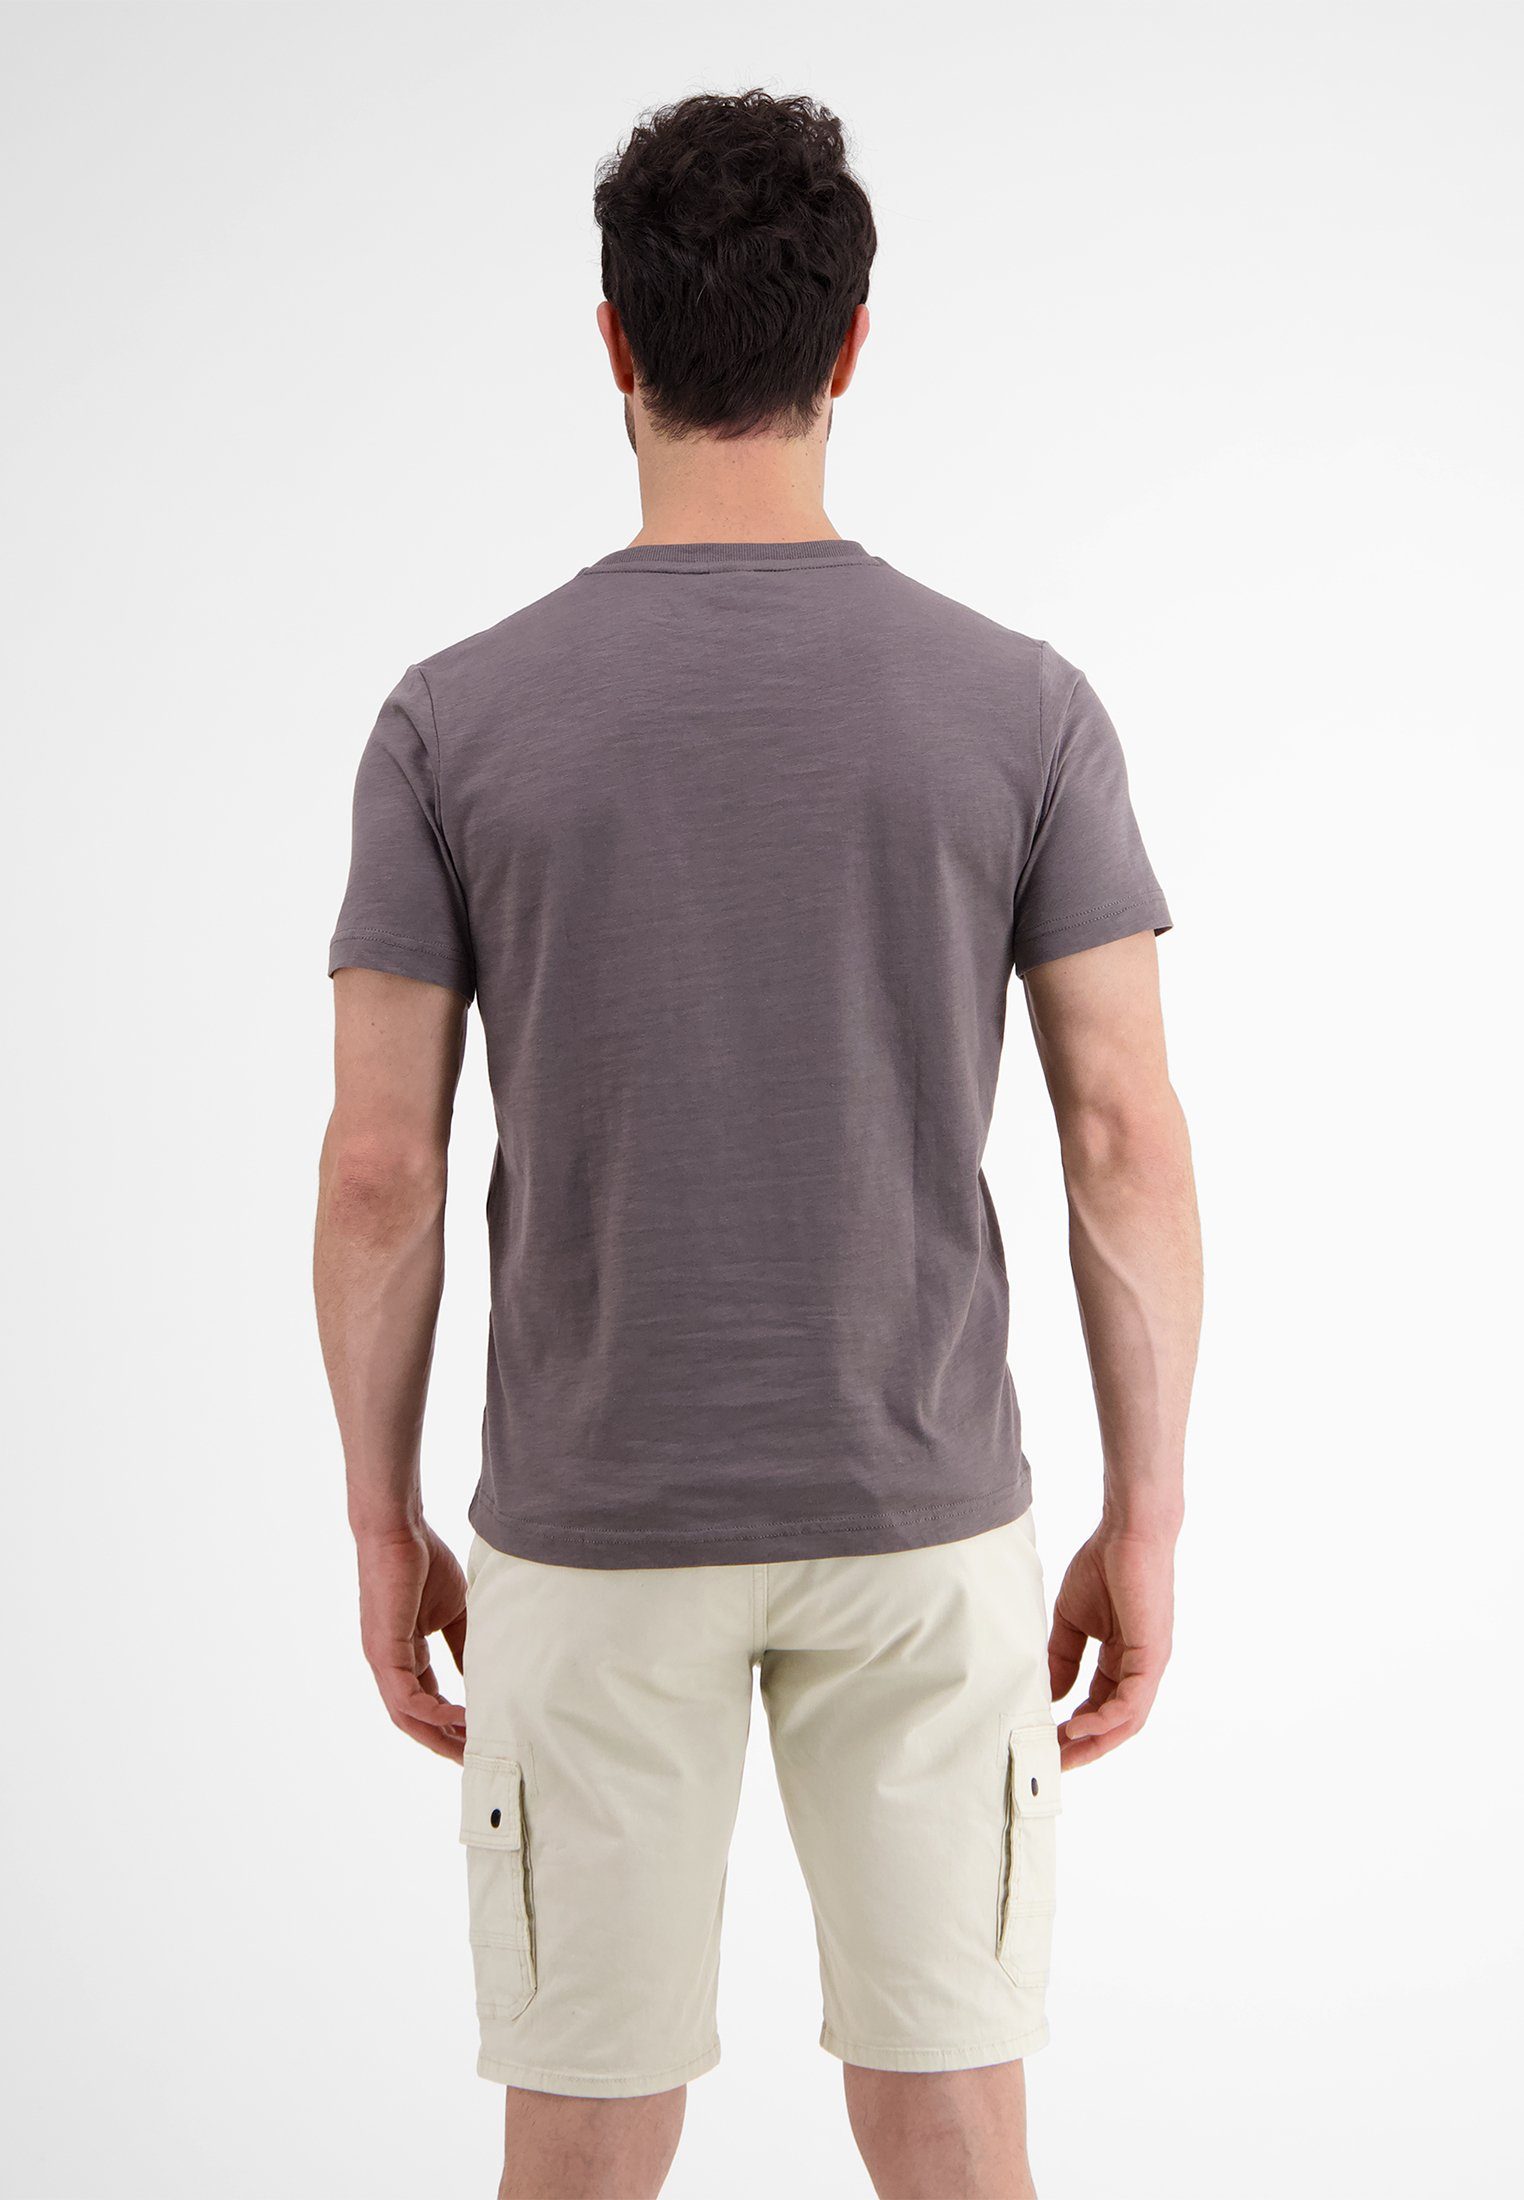 BASALT auf GREY Print LERROS T-Shirt T-Shirt, linker LERROS Brust